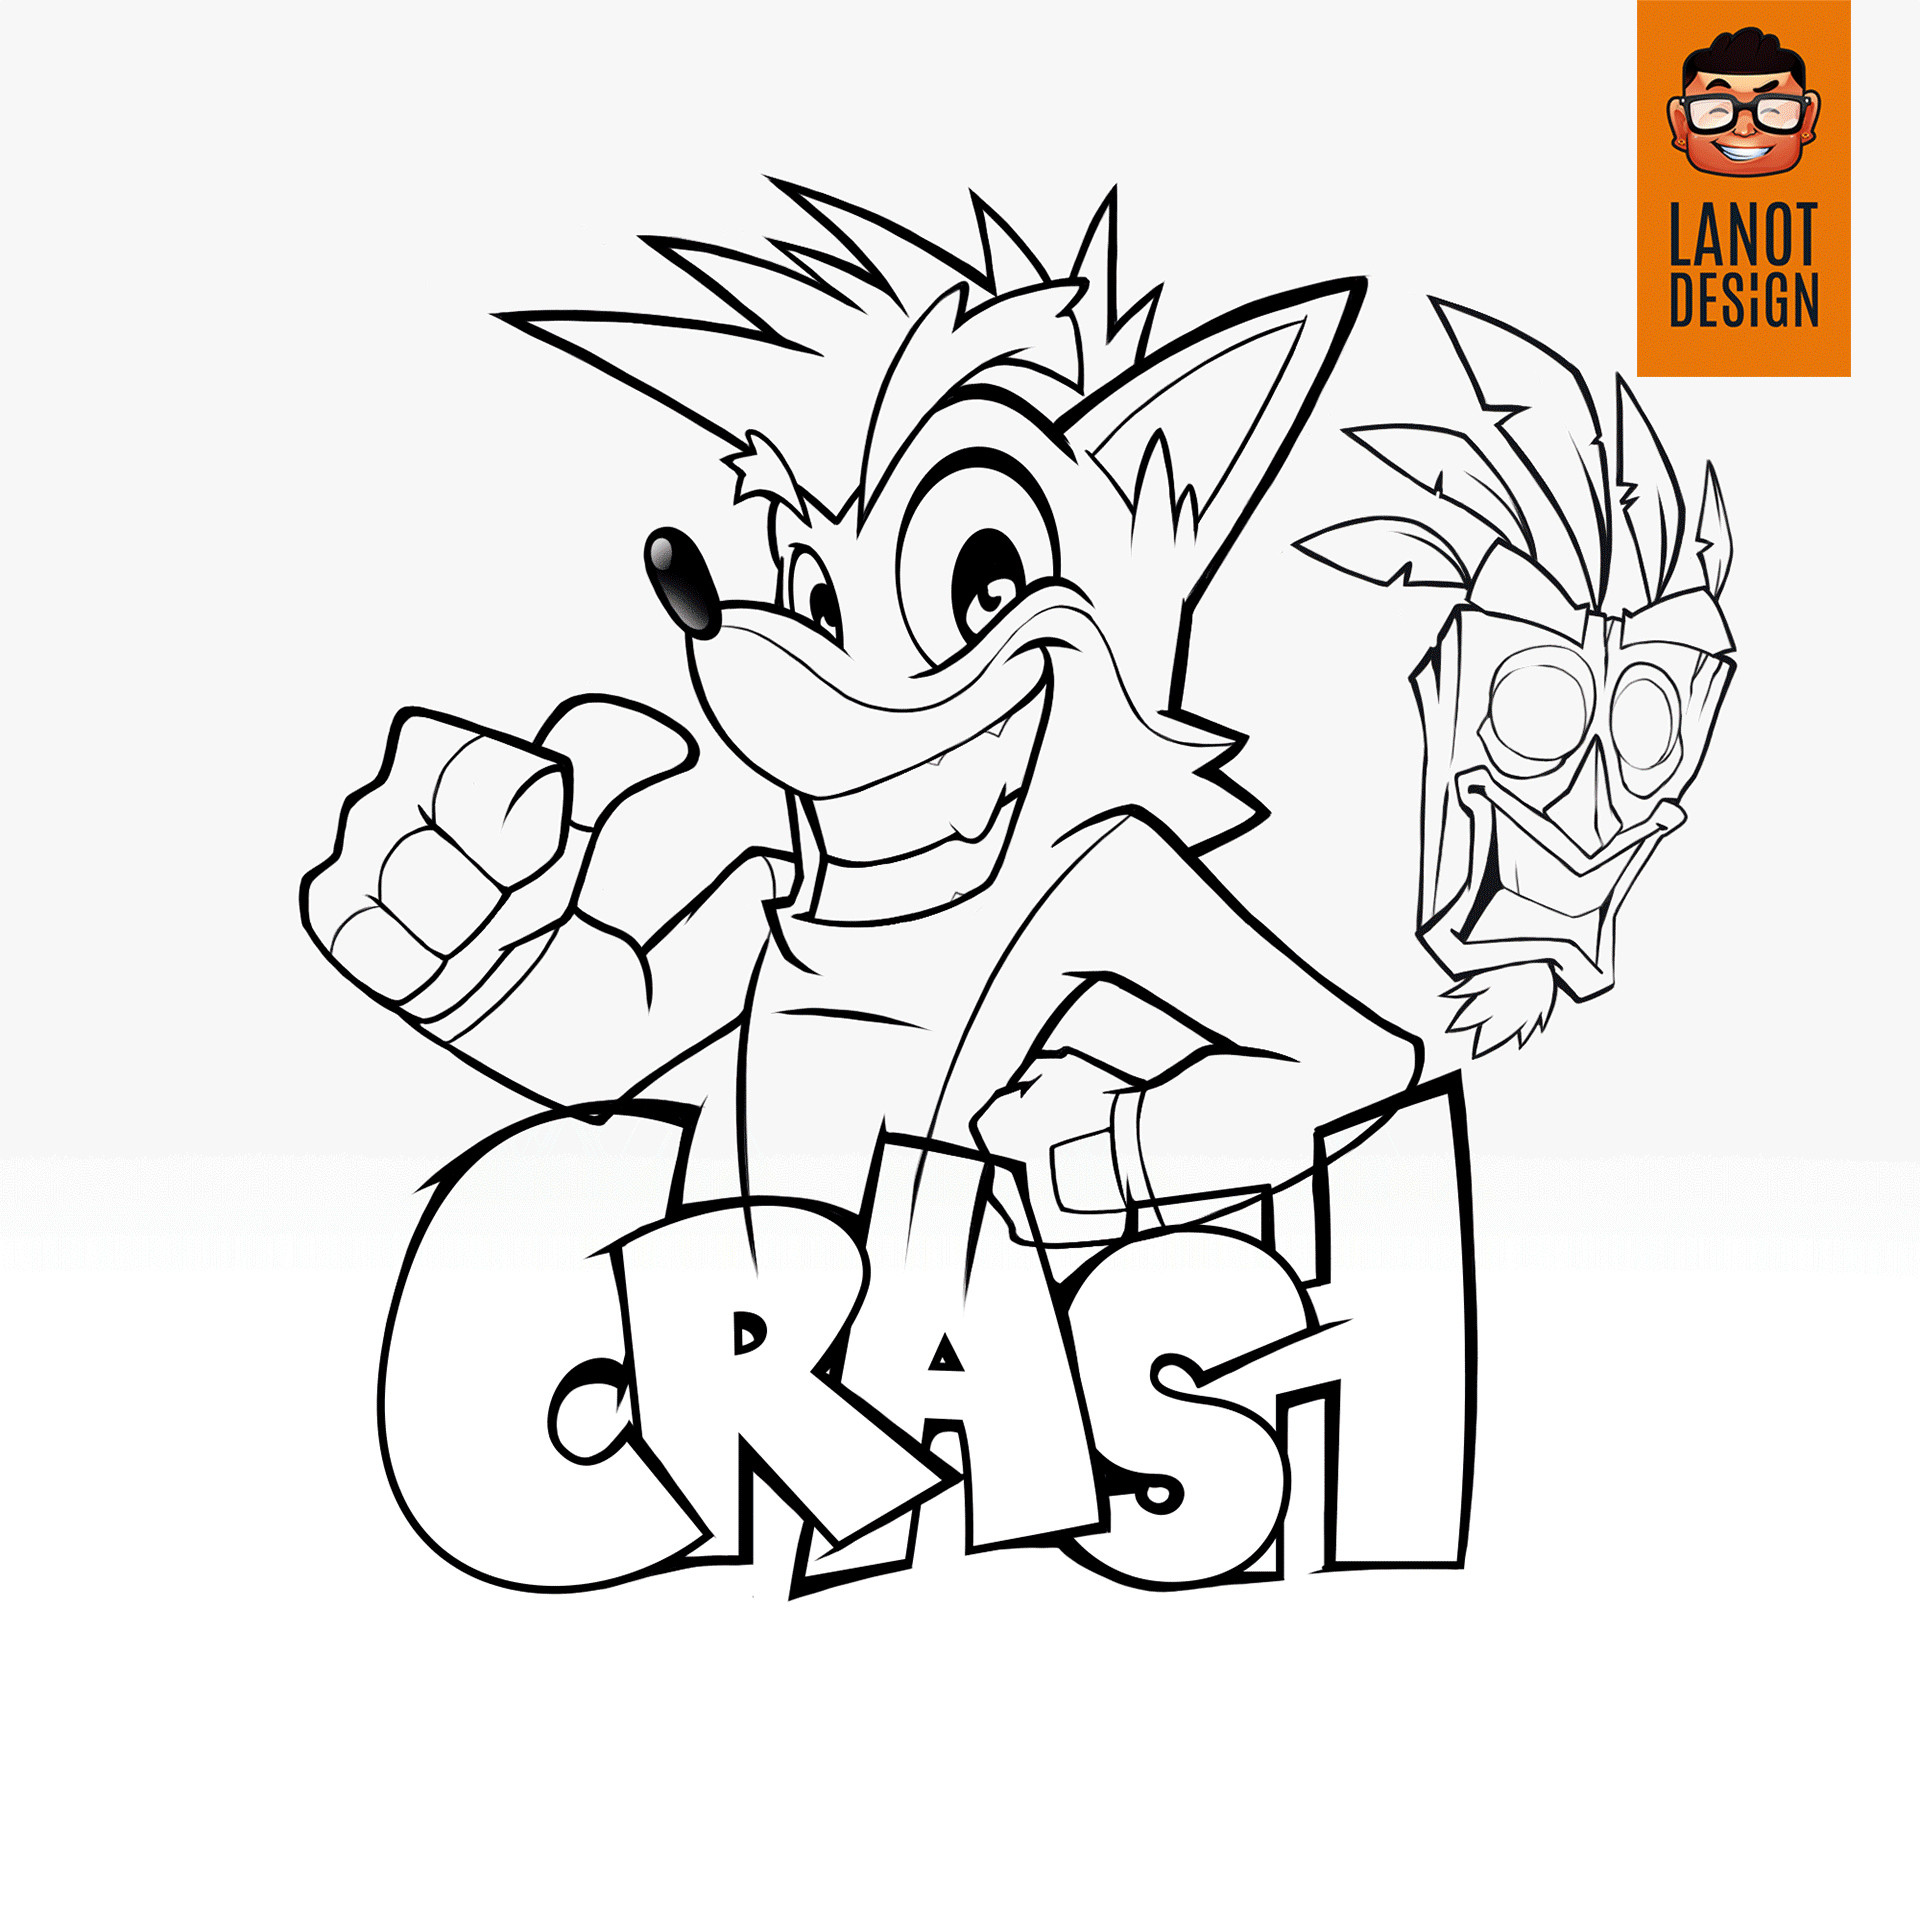 Crash bandicoot #7